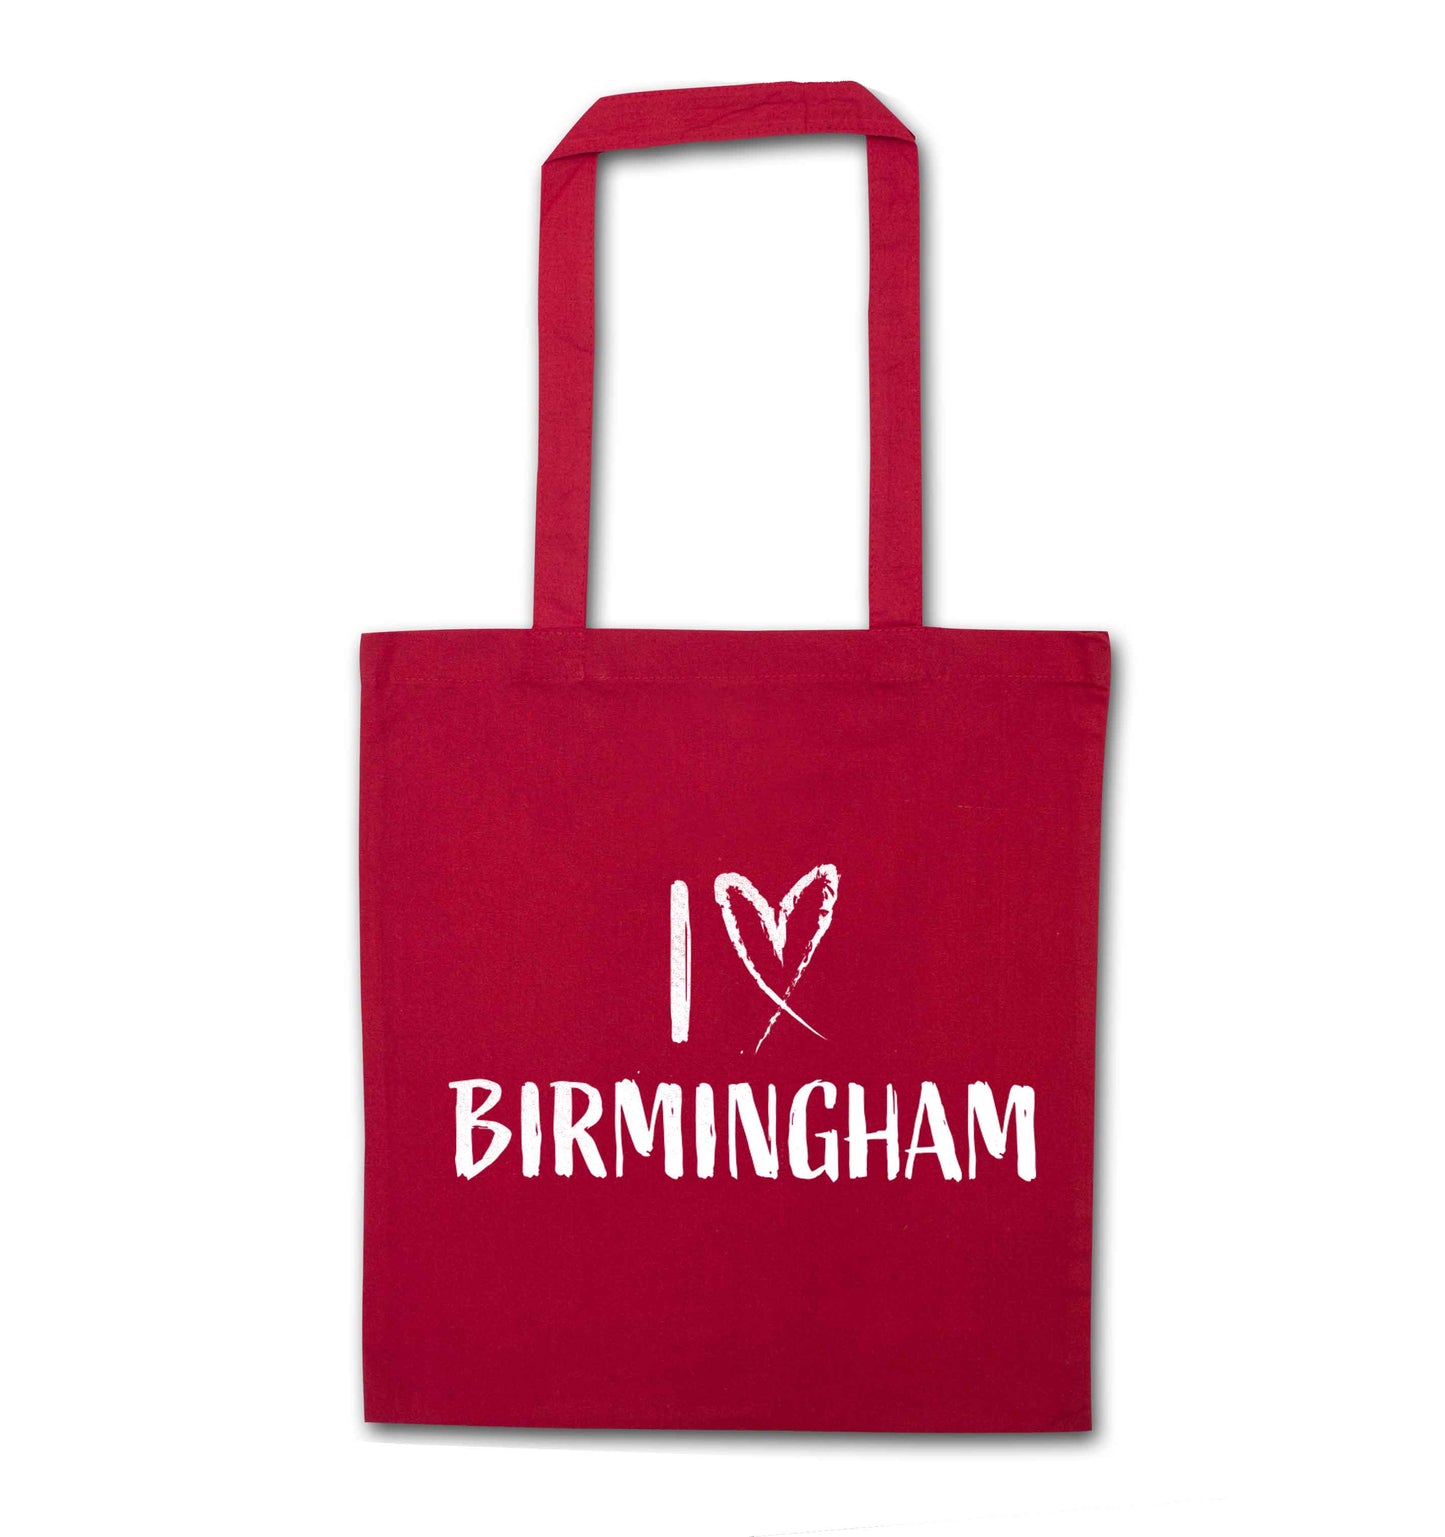 I love Birmingham red tote bag